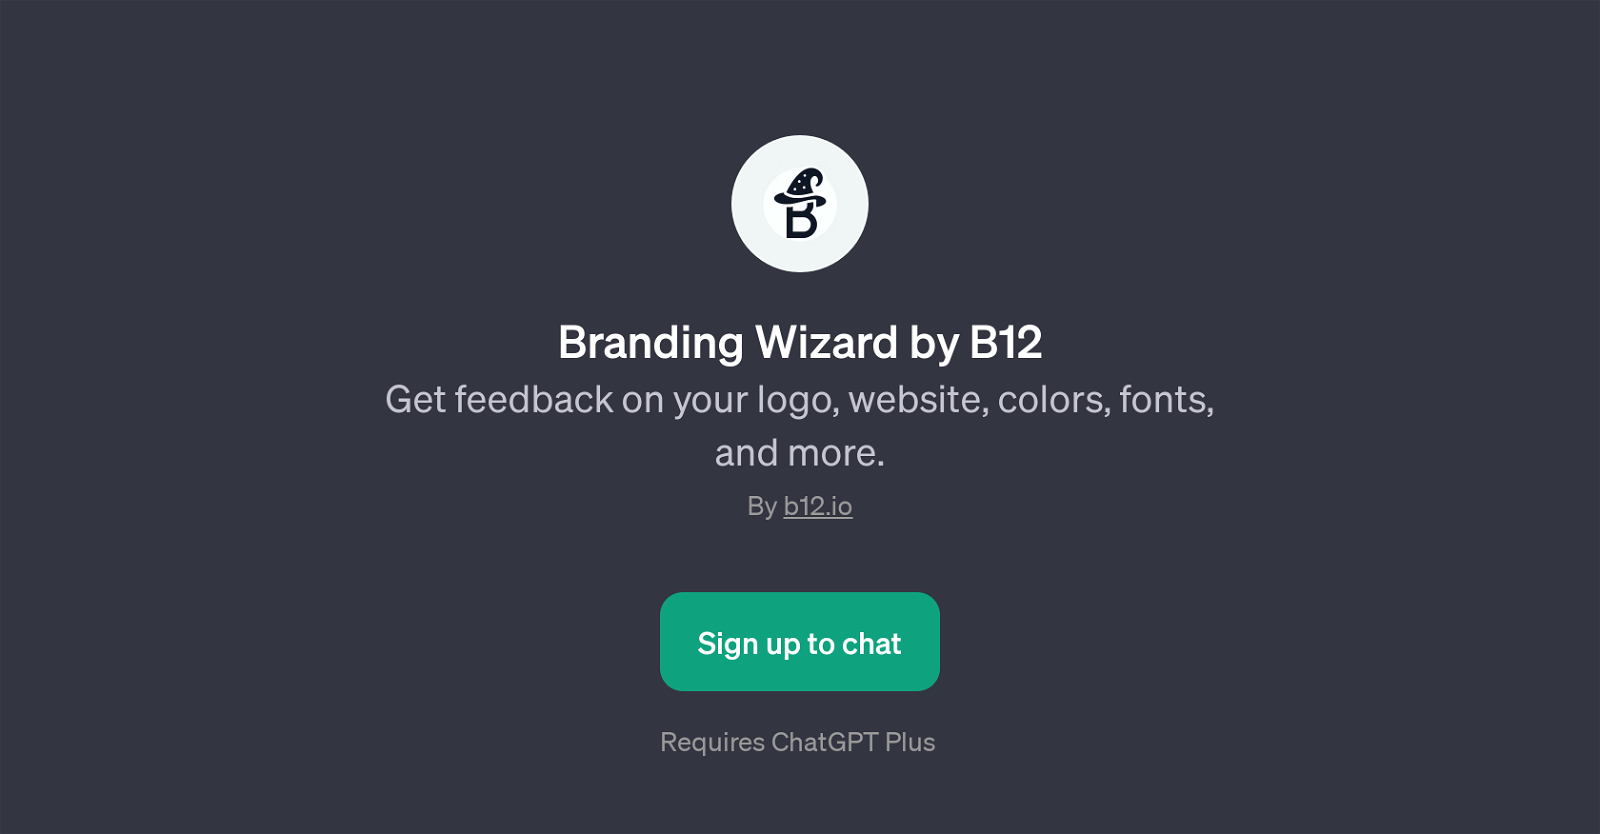 Branding Wizard by B12 website